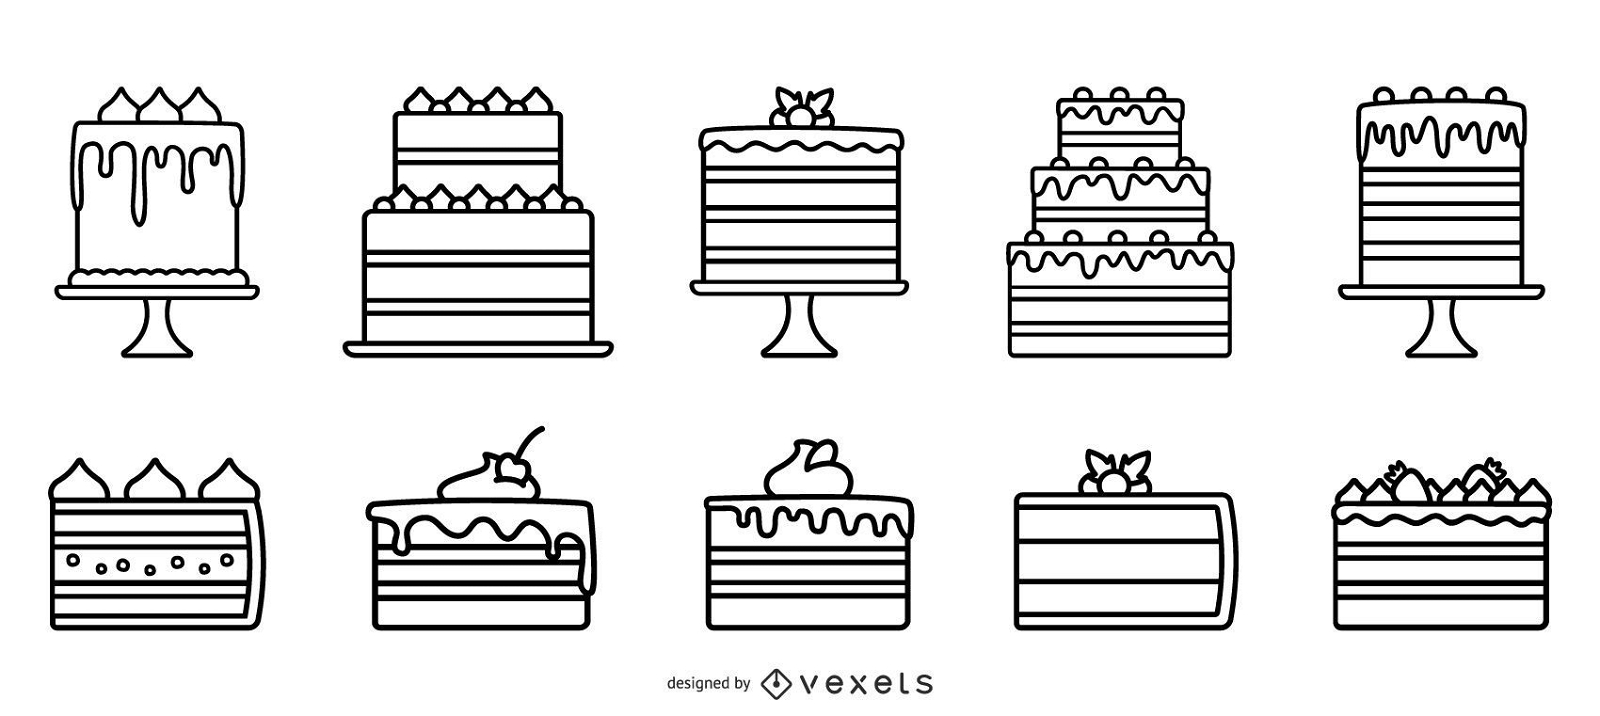 Cake Flat Design Stroke Design Pack